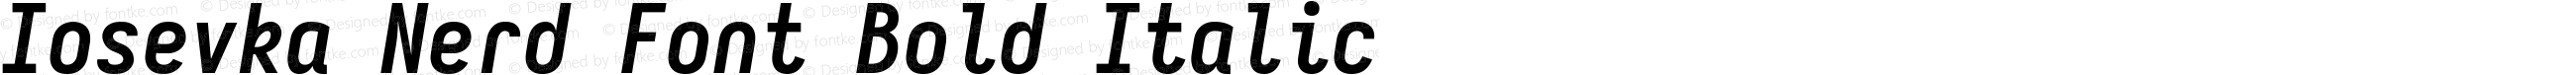 Iosevka Mayukai Monolite Bold Italic Nerd Font Complete